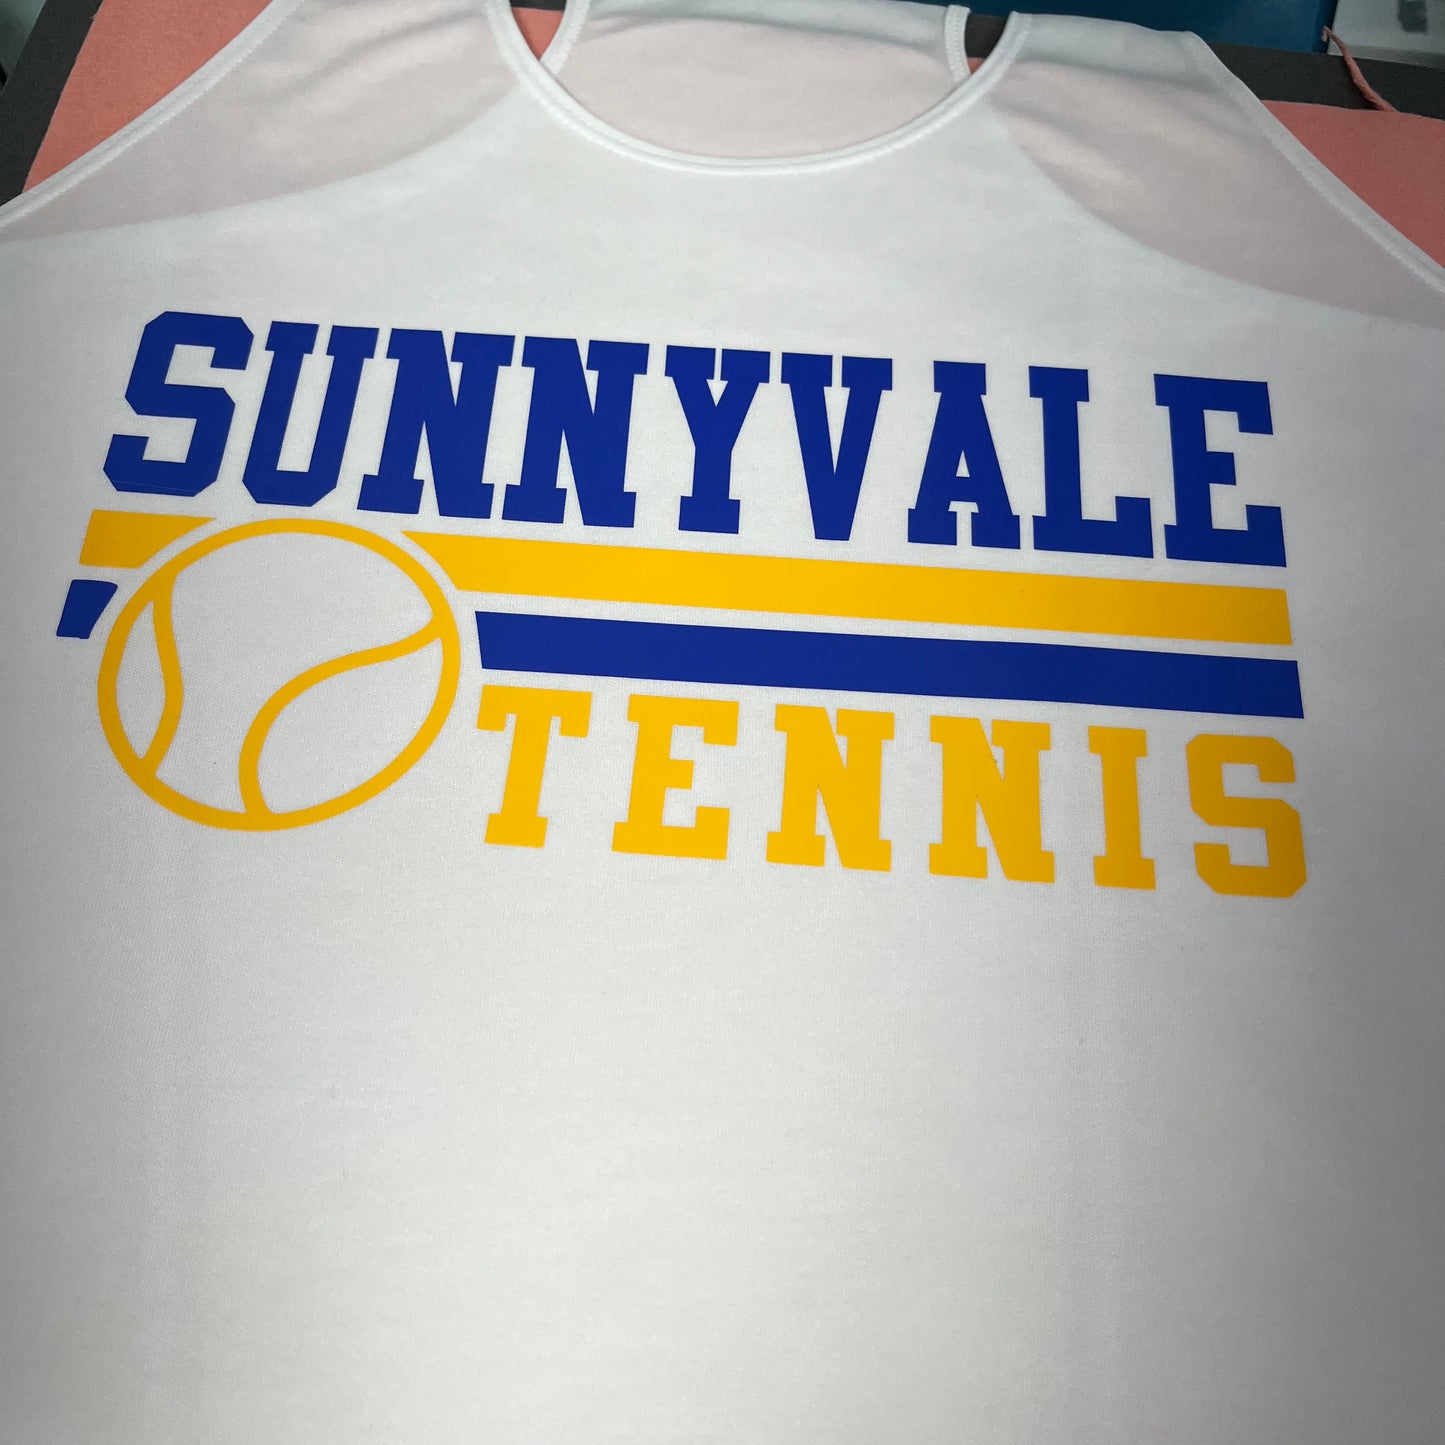 Sunnyvale Tennis - white